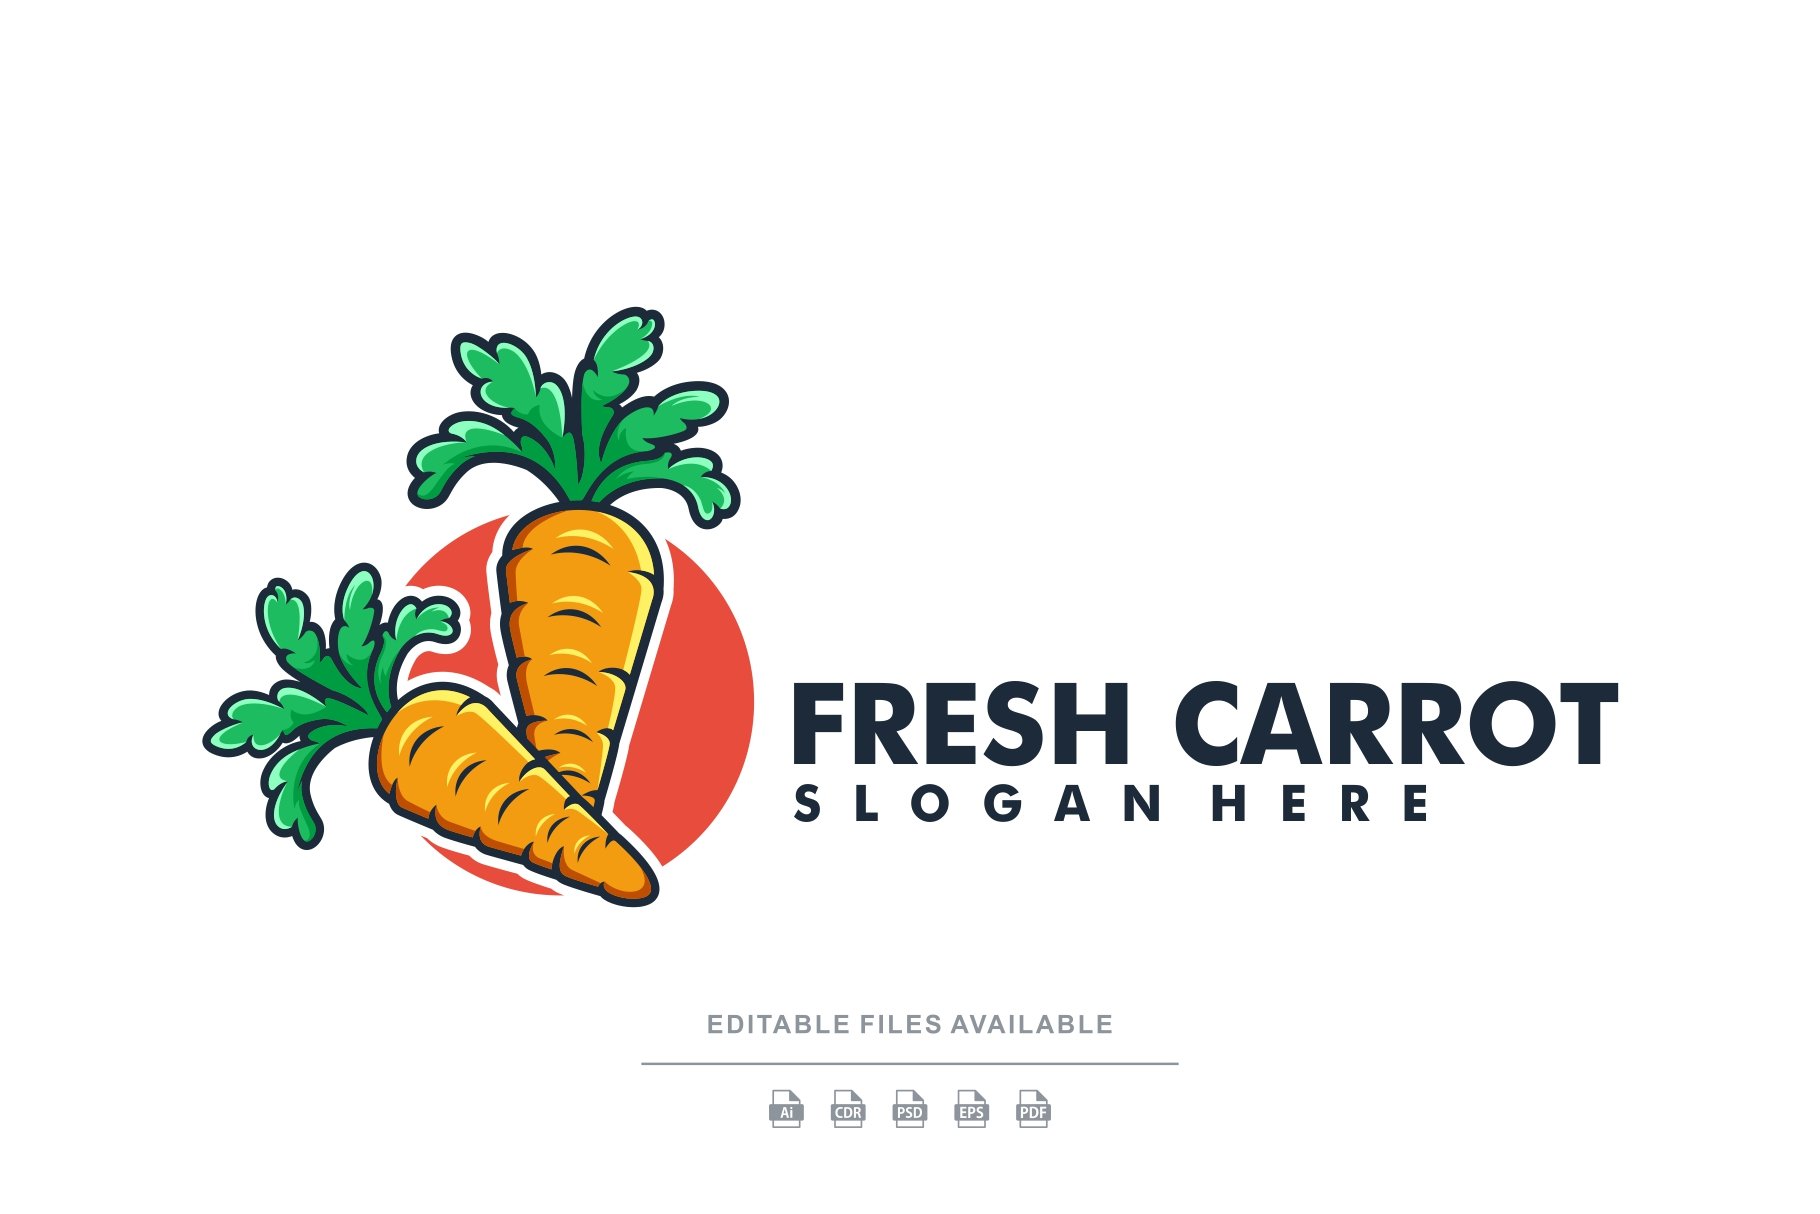 Fresh Carrot Simple Logo cover image.